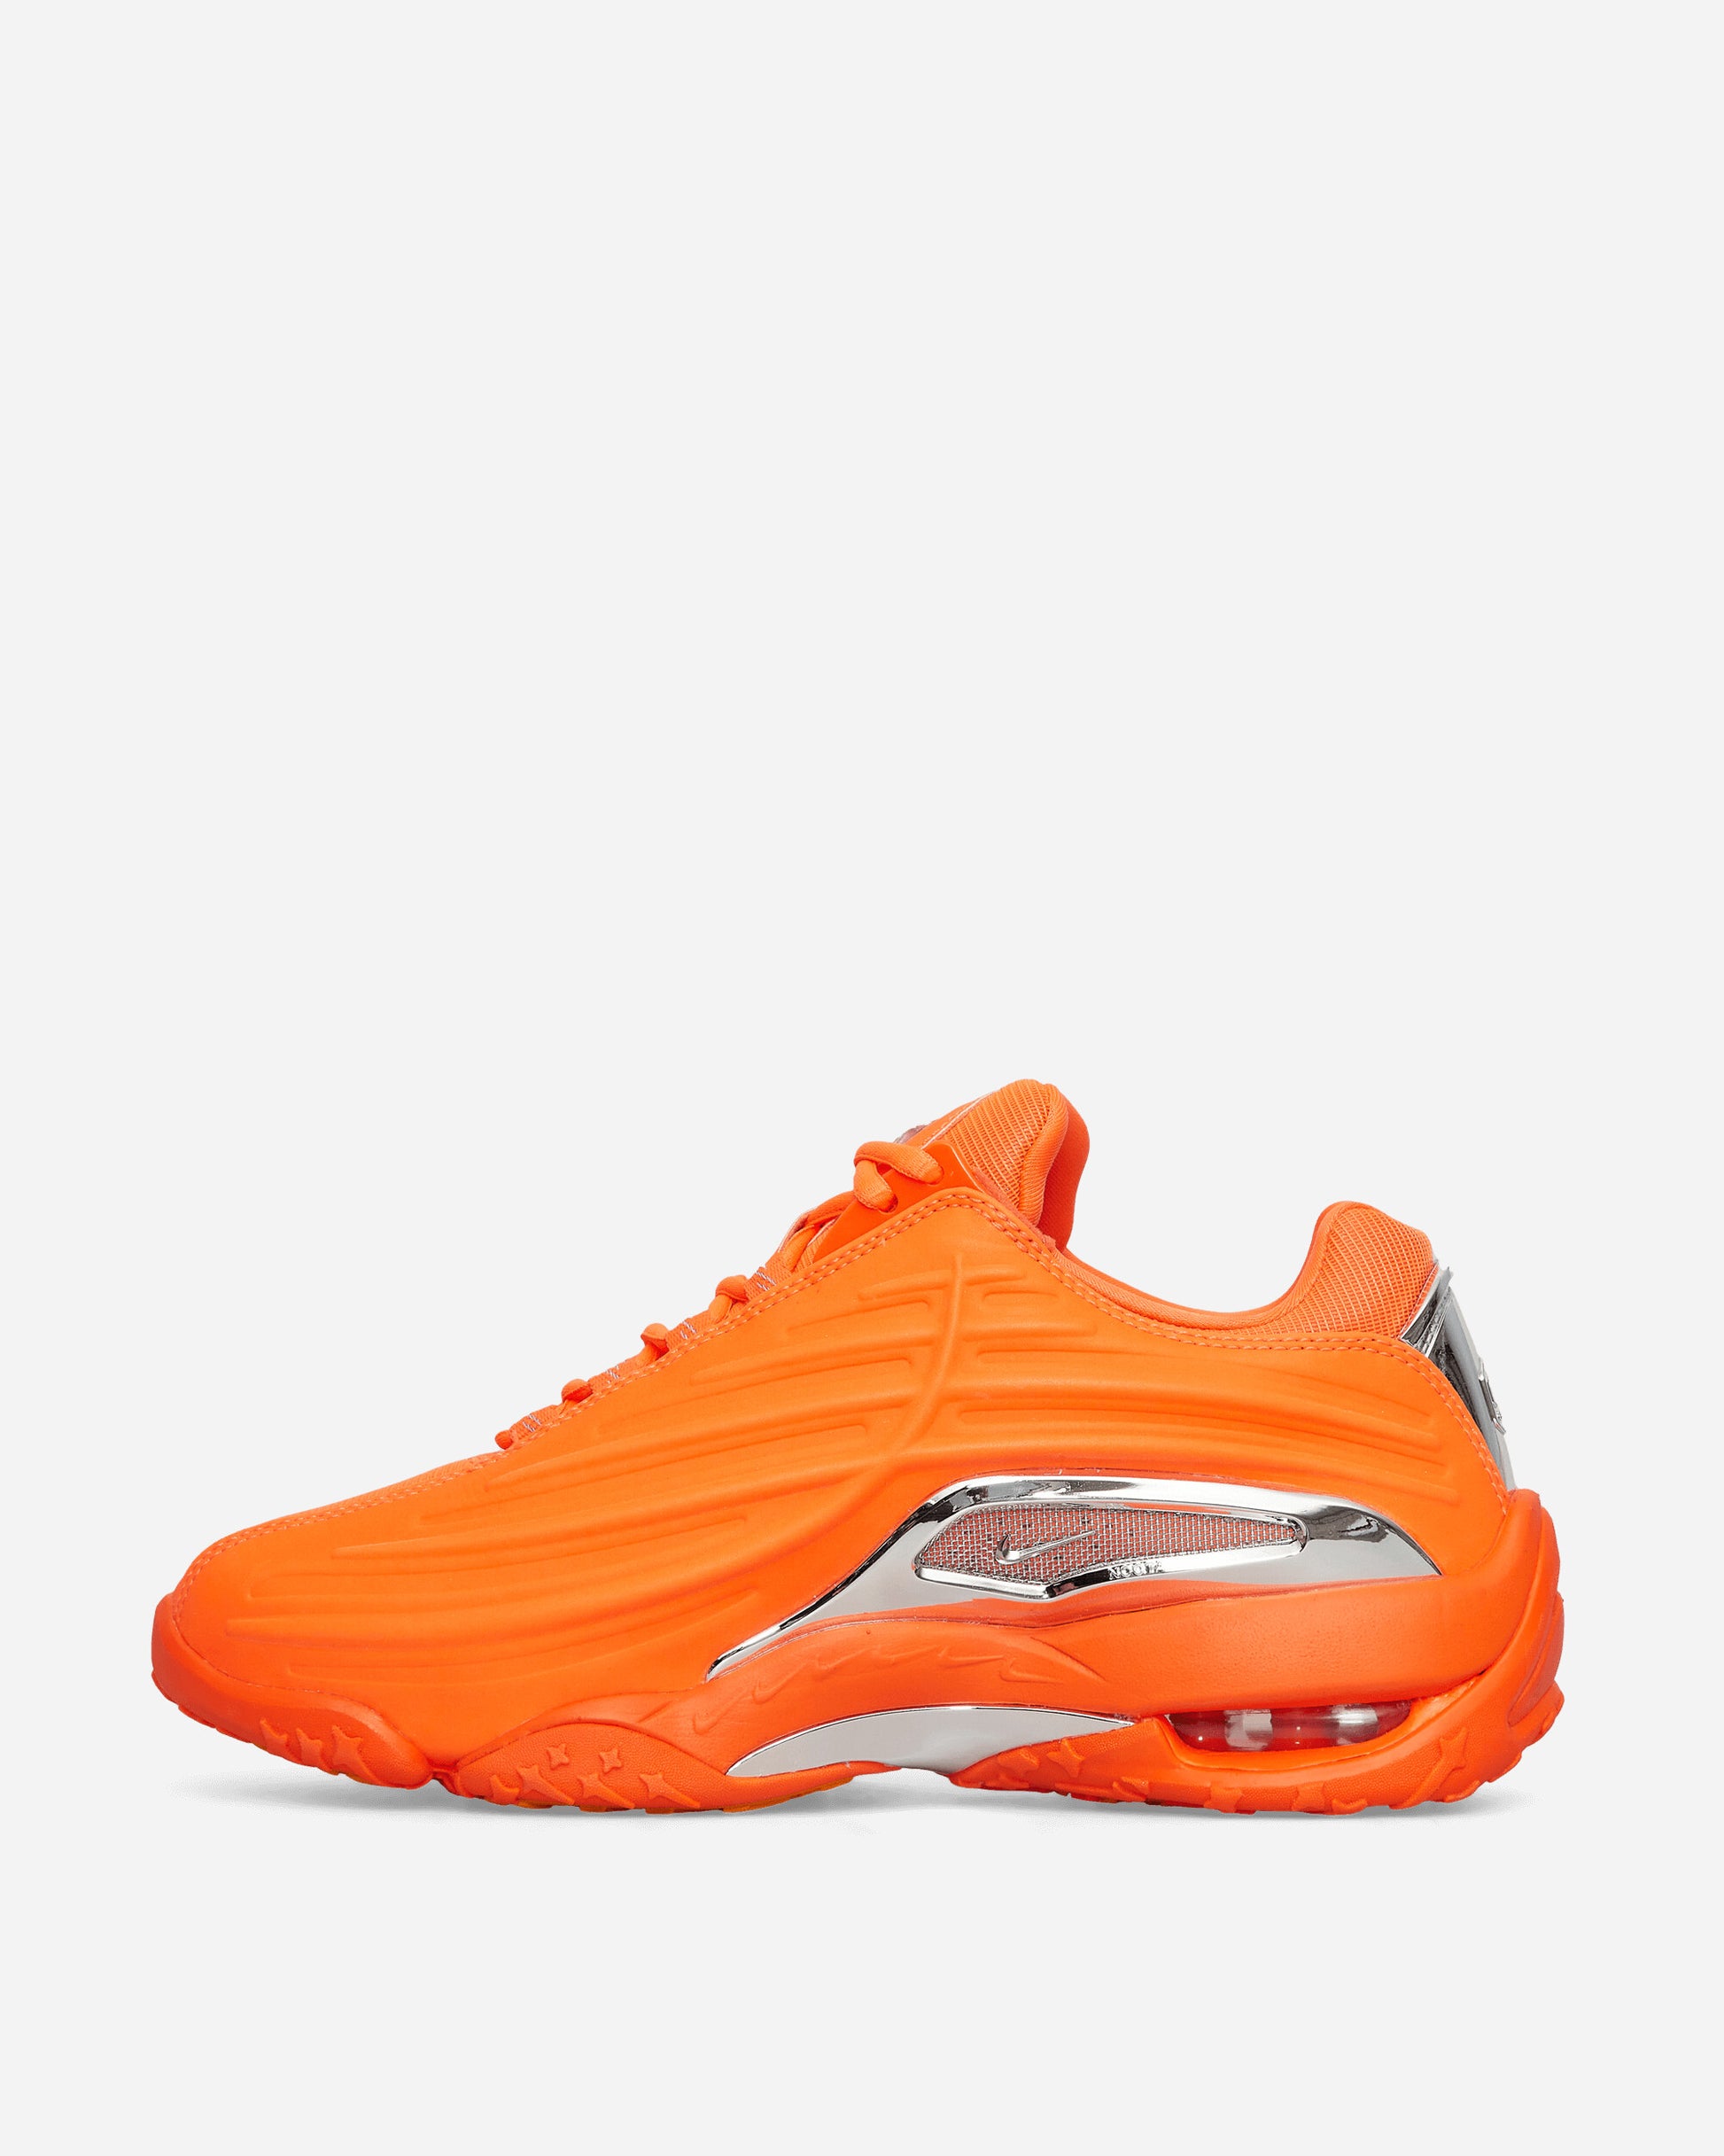 Nike Nocta Hot Step Ii Total Orange/Chrome Sneakers Low DZ7293-800